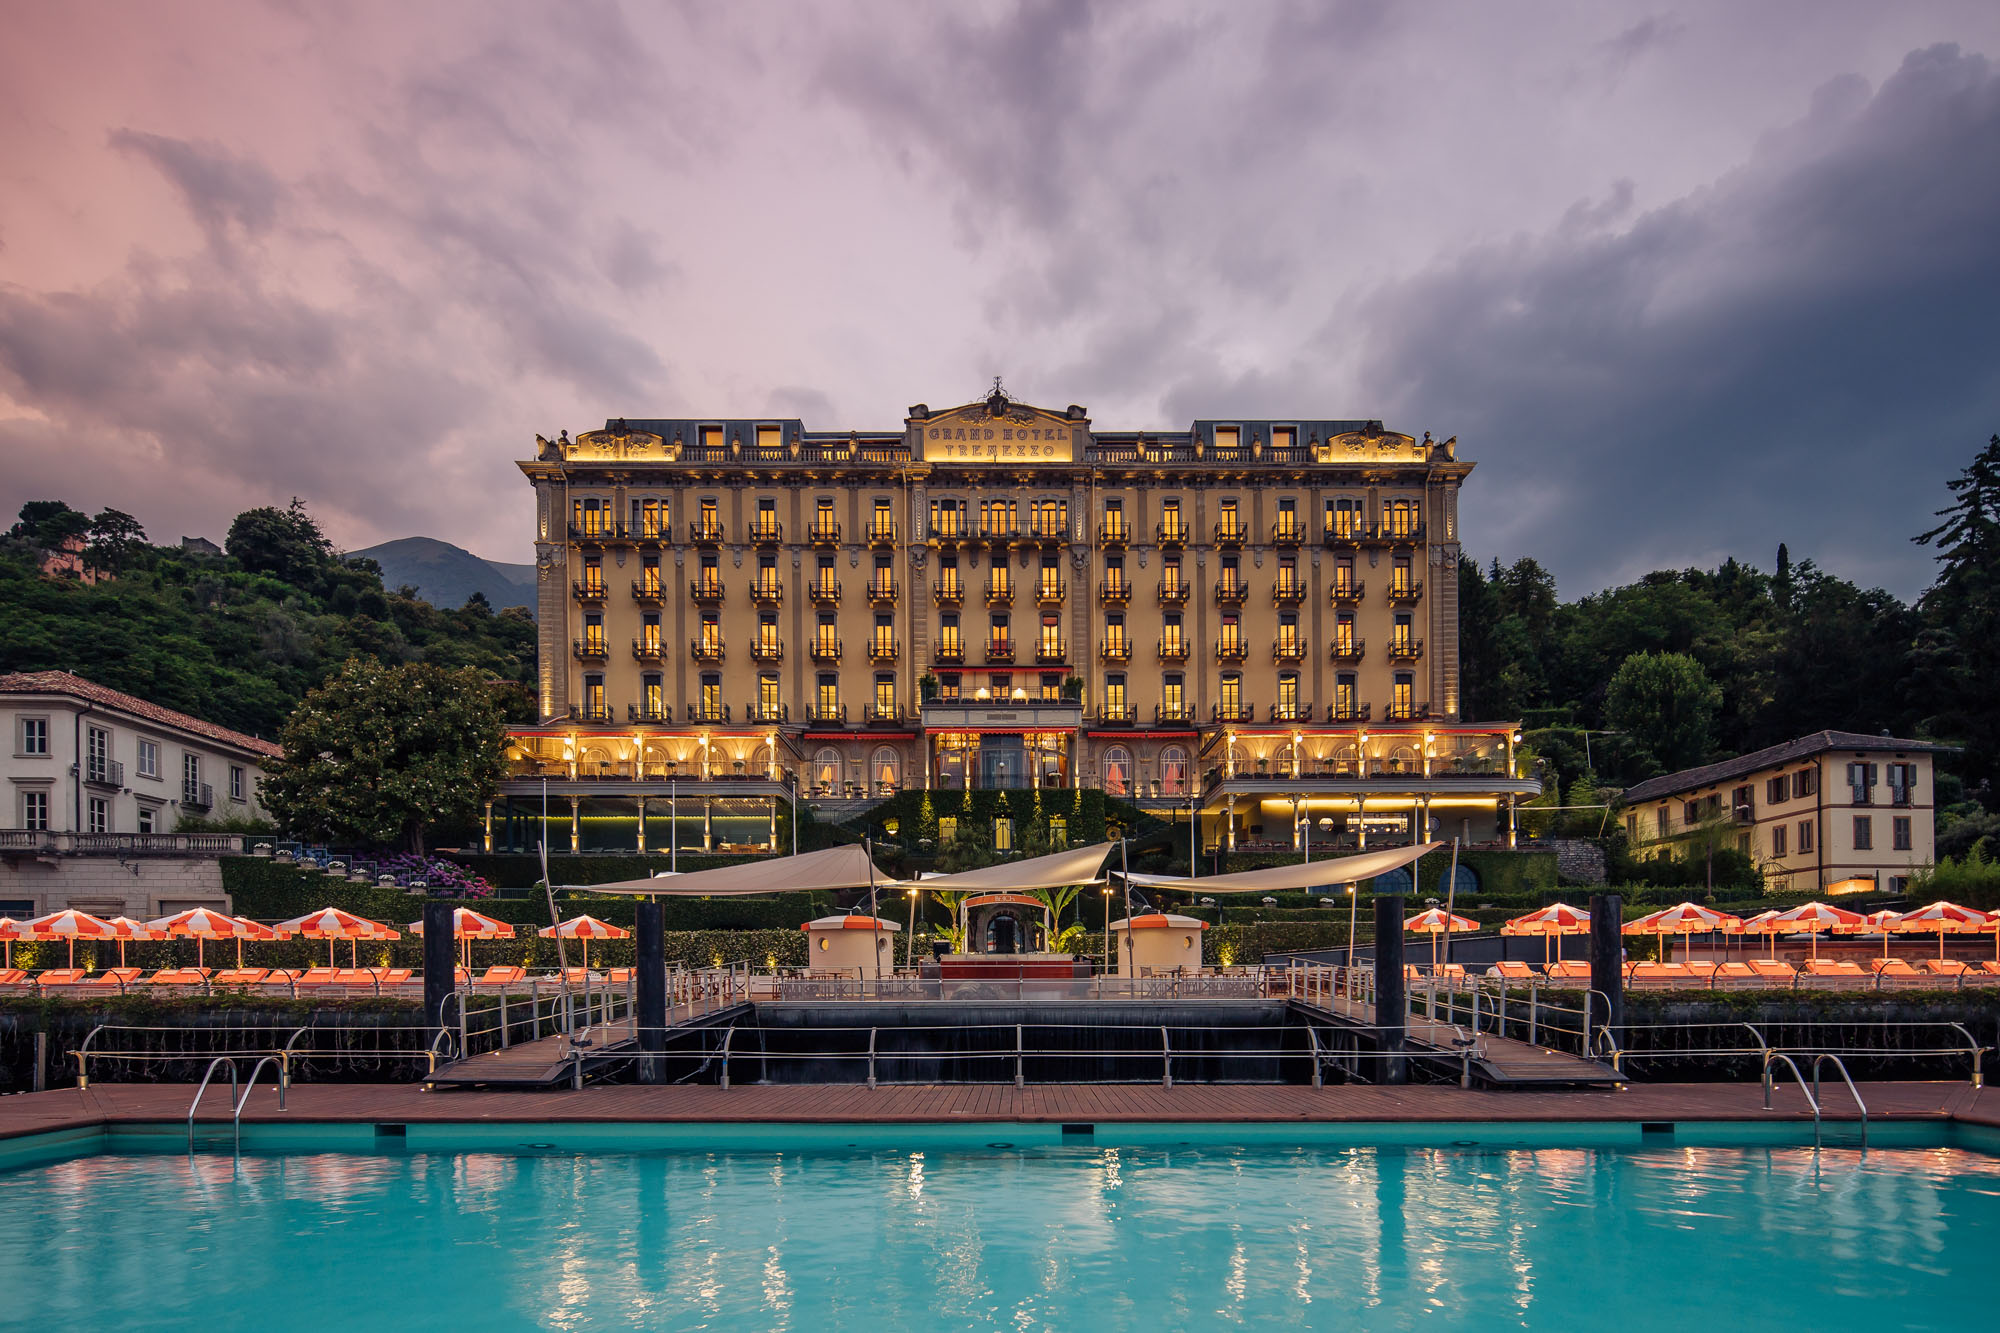 Grand Hotel Tremezzo - The Palace at night